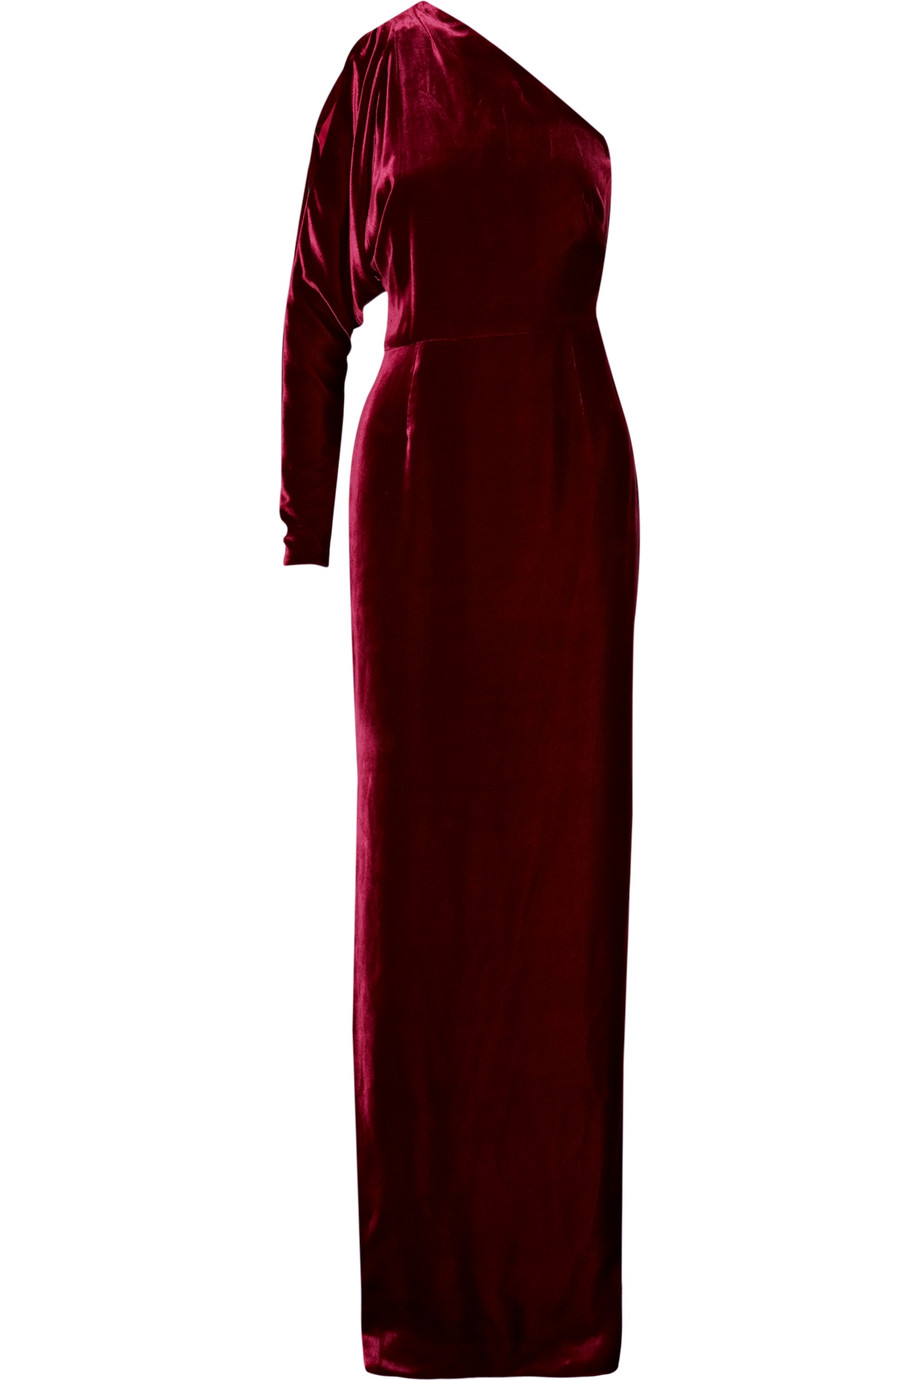 Lyst - Ralph Lauren Collection Bryson Asymmetric Velvet Gown in Purple